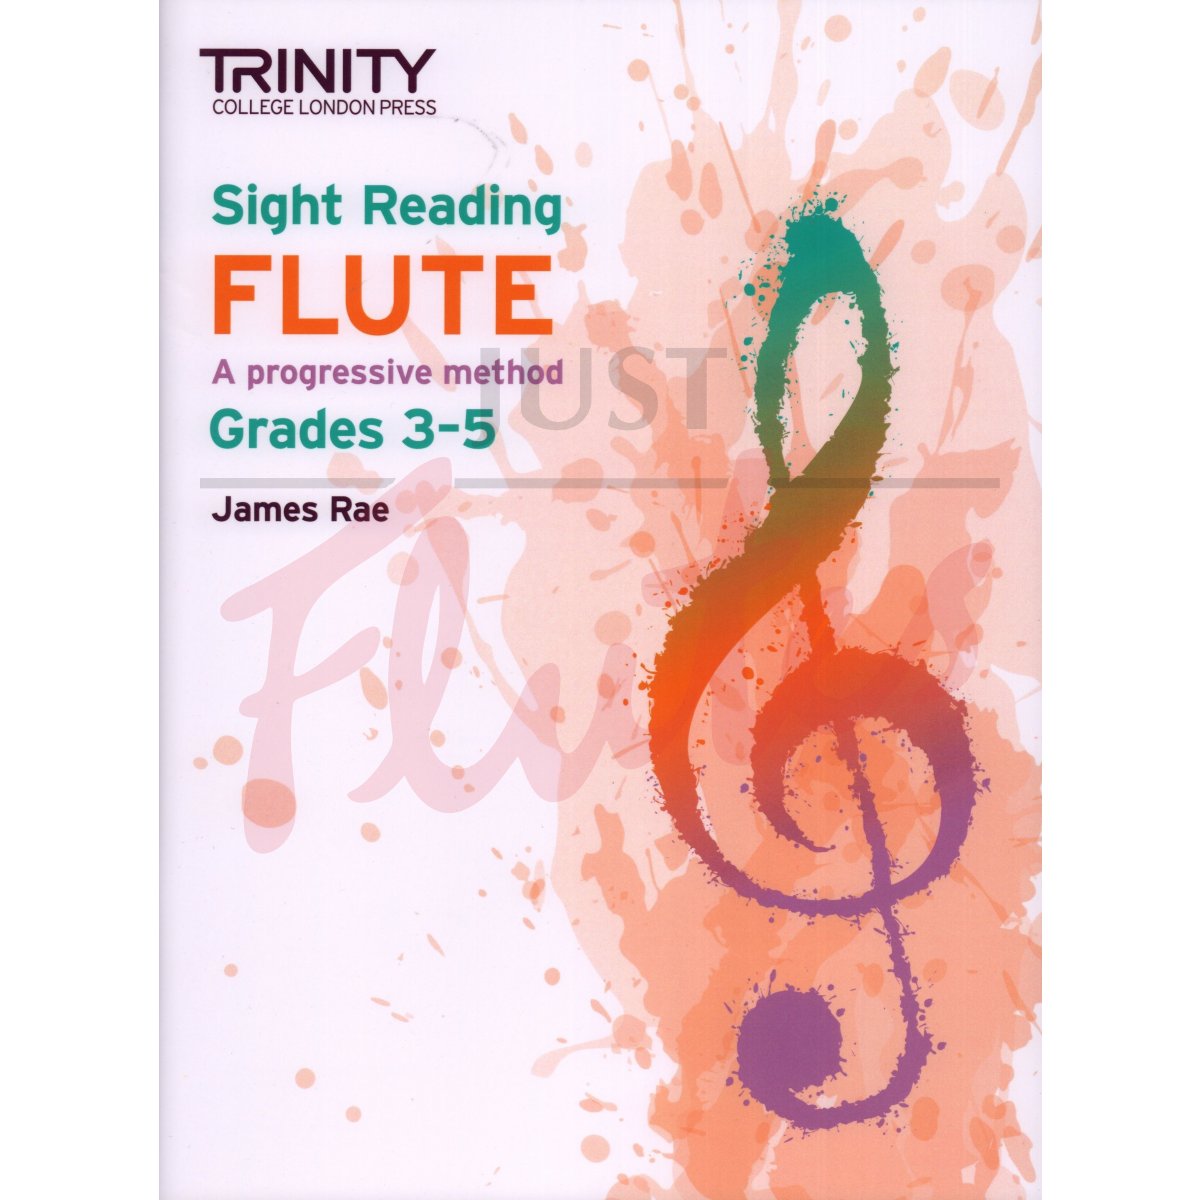 Sight Reading Flute: A Progressive Method, Grades 3-5